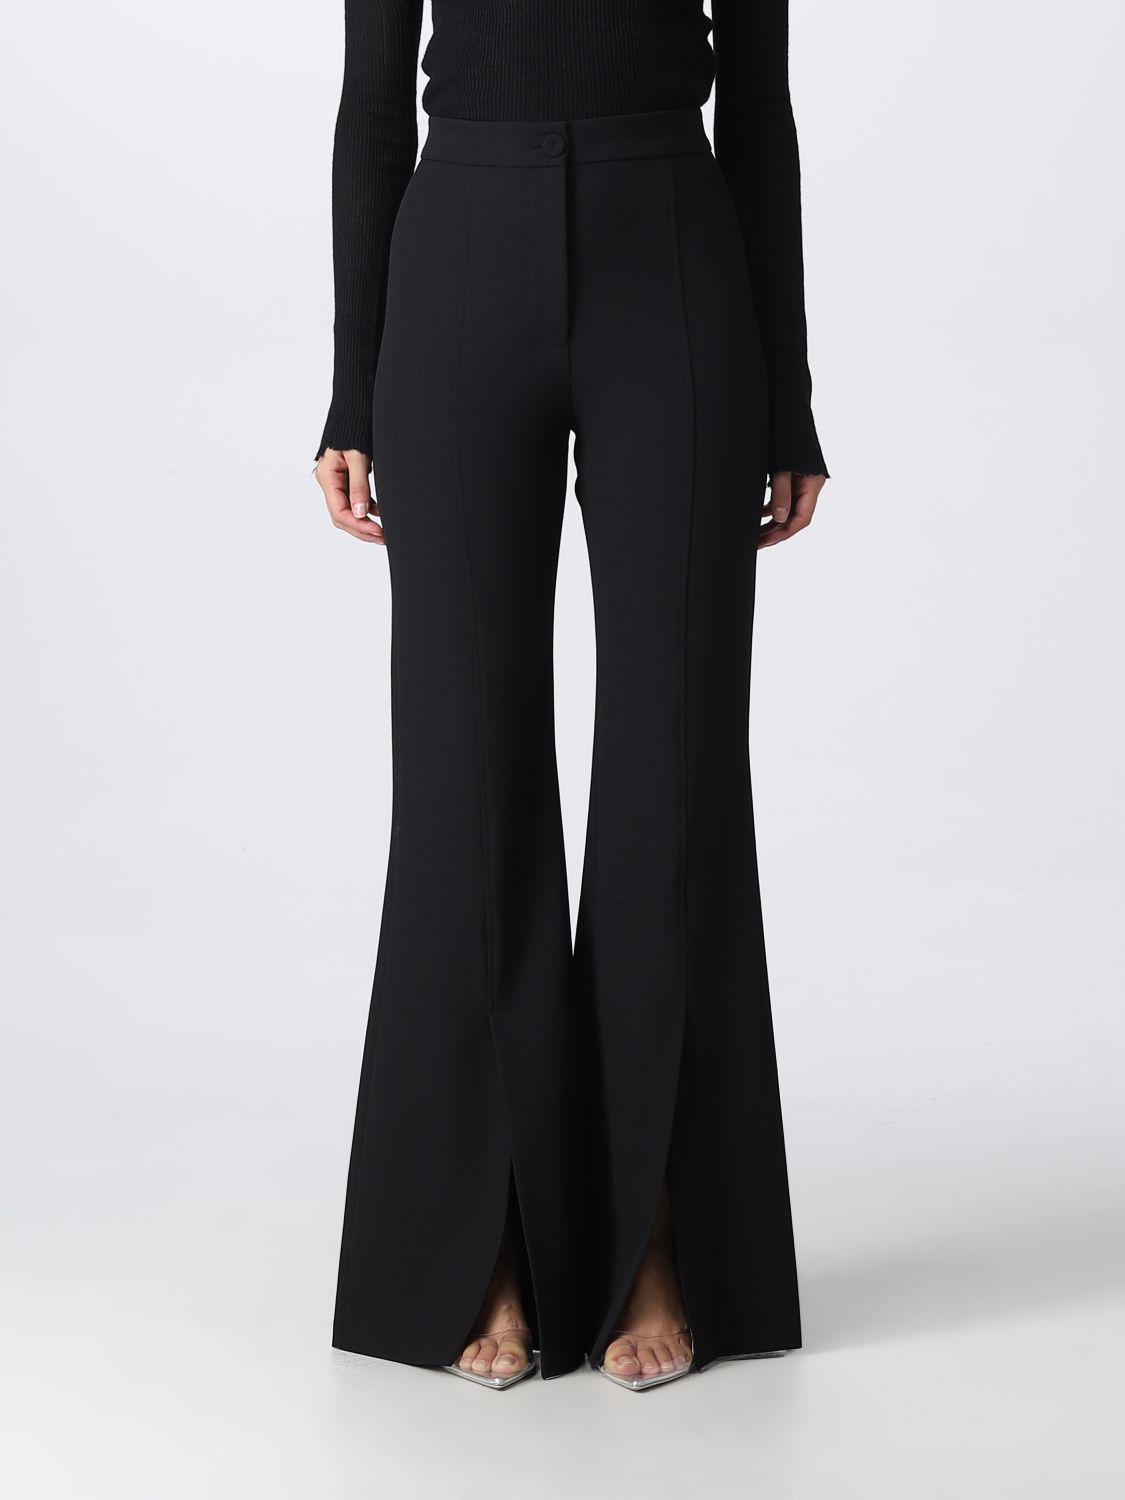 Erika Cavallini Semi-couture Trousers Black